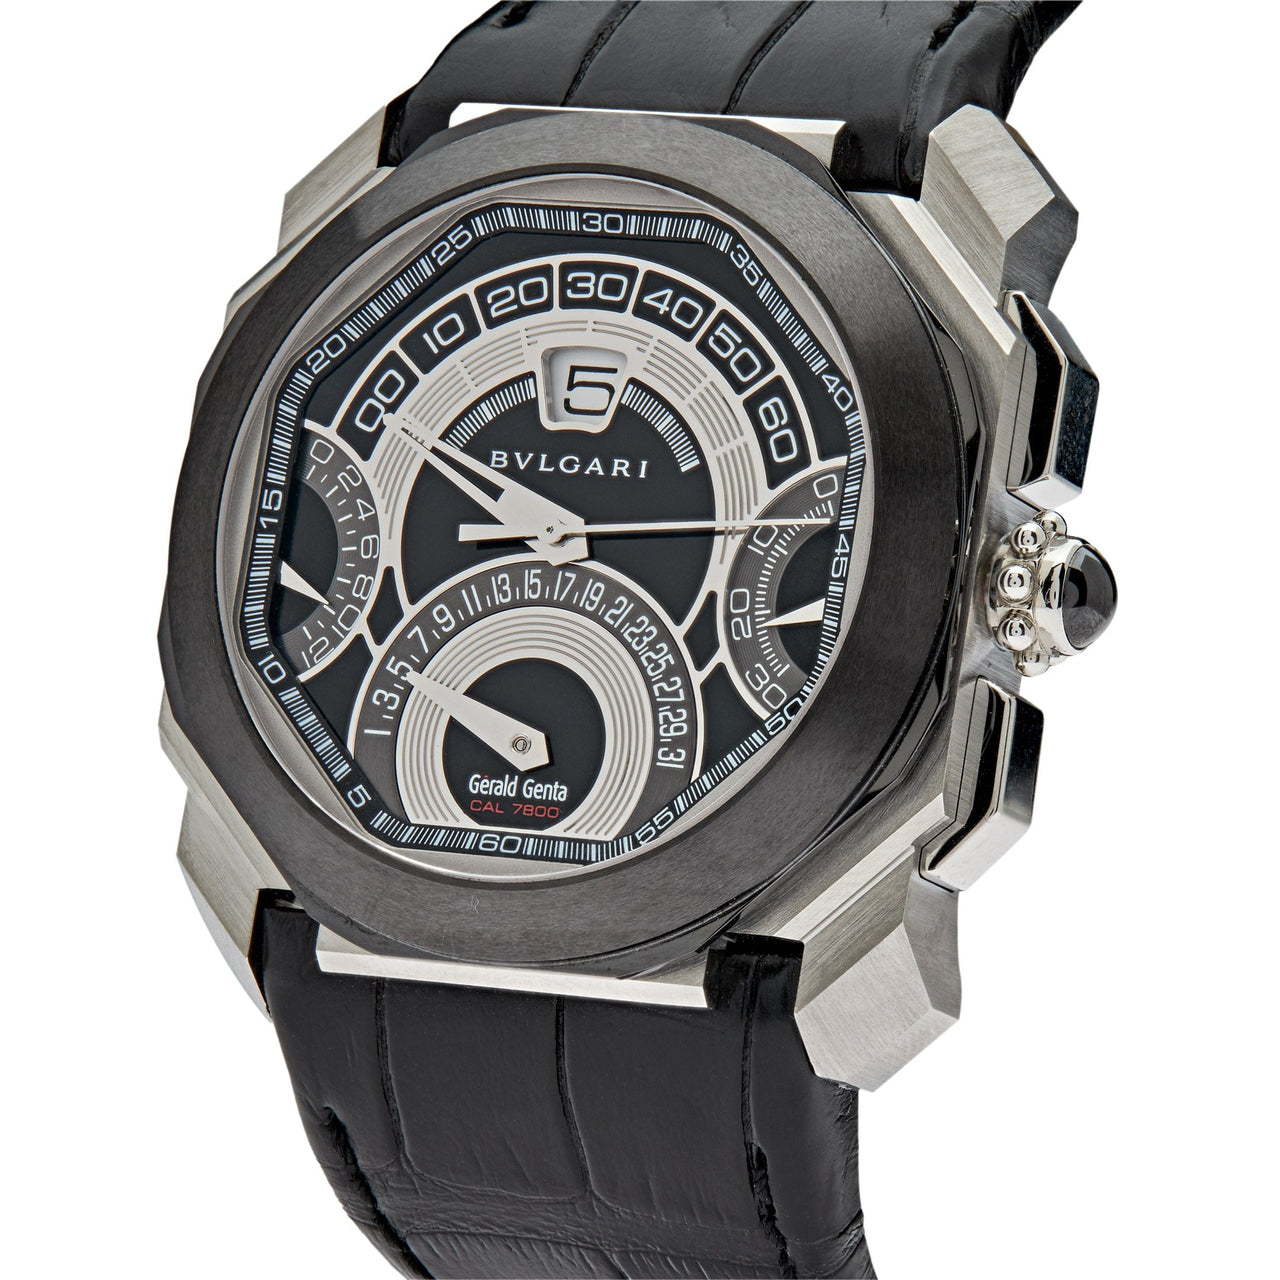 Luxury Watch Bvlgari OCTO RETROGRADI Chronograph BGO45BSCLDCHQR-101882 wrist aficionado